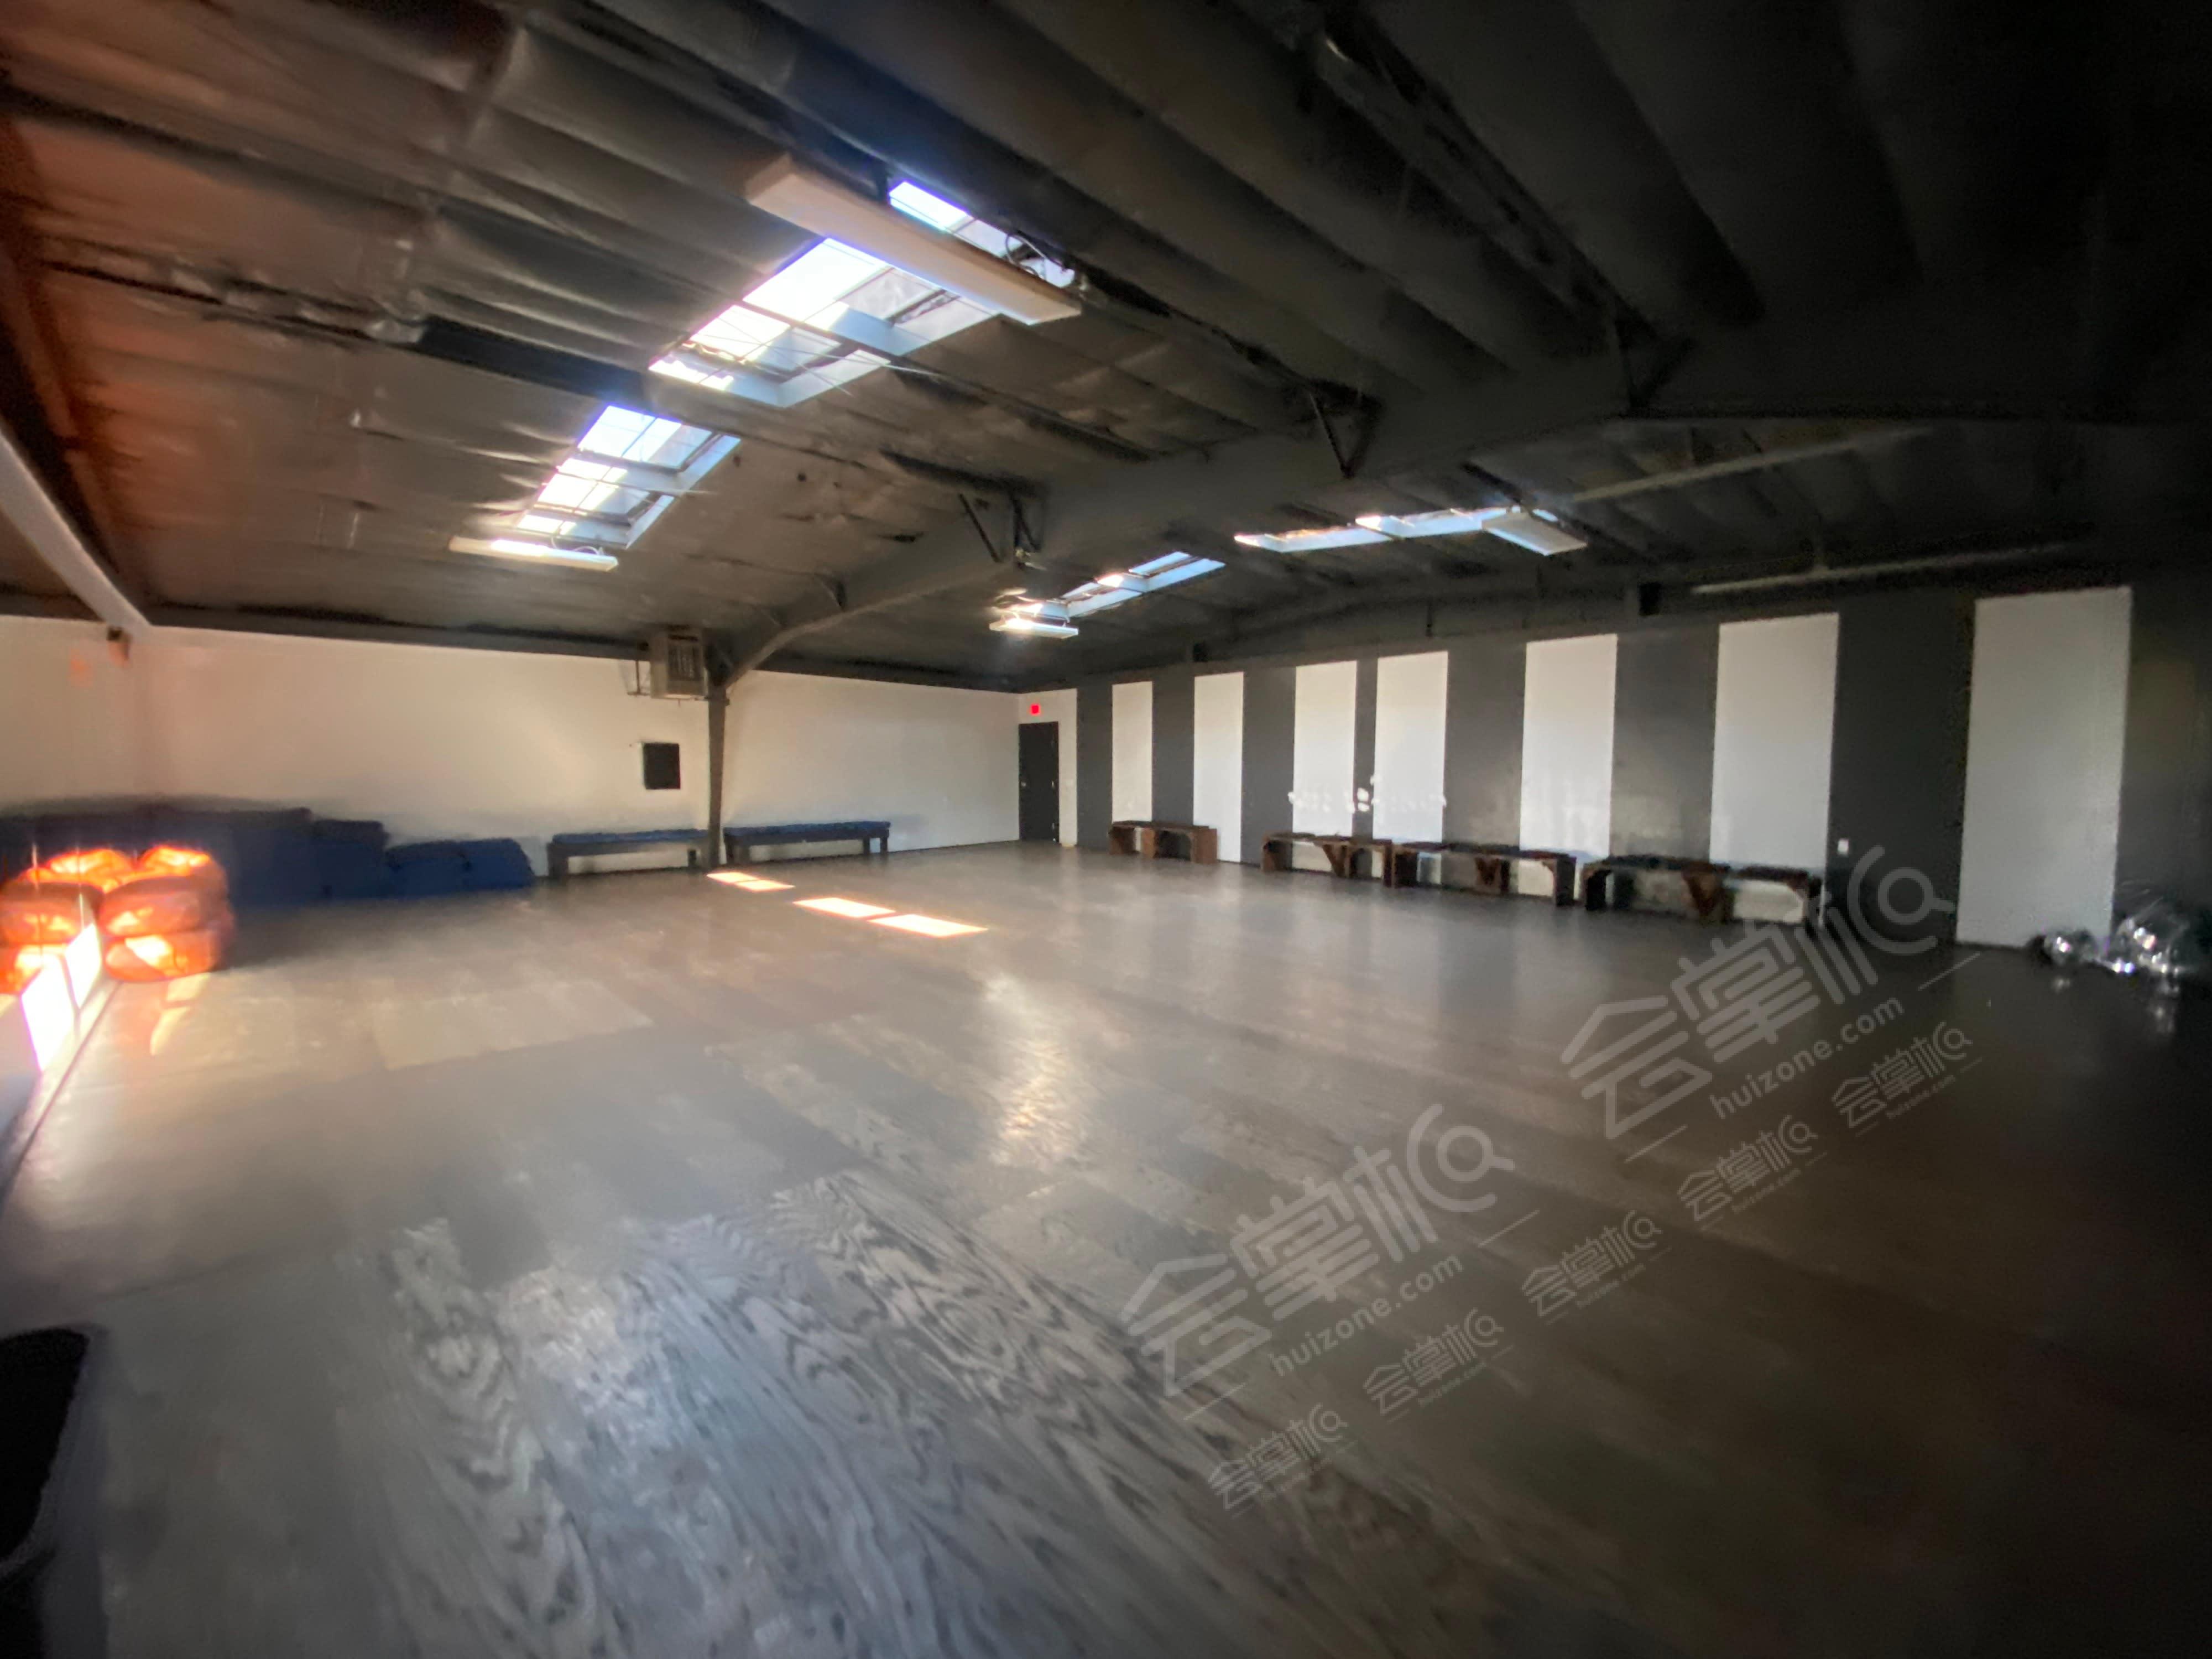 Private event venue and creative studio in the heart of the Denver Arts District